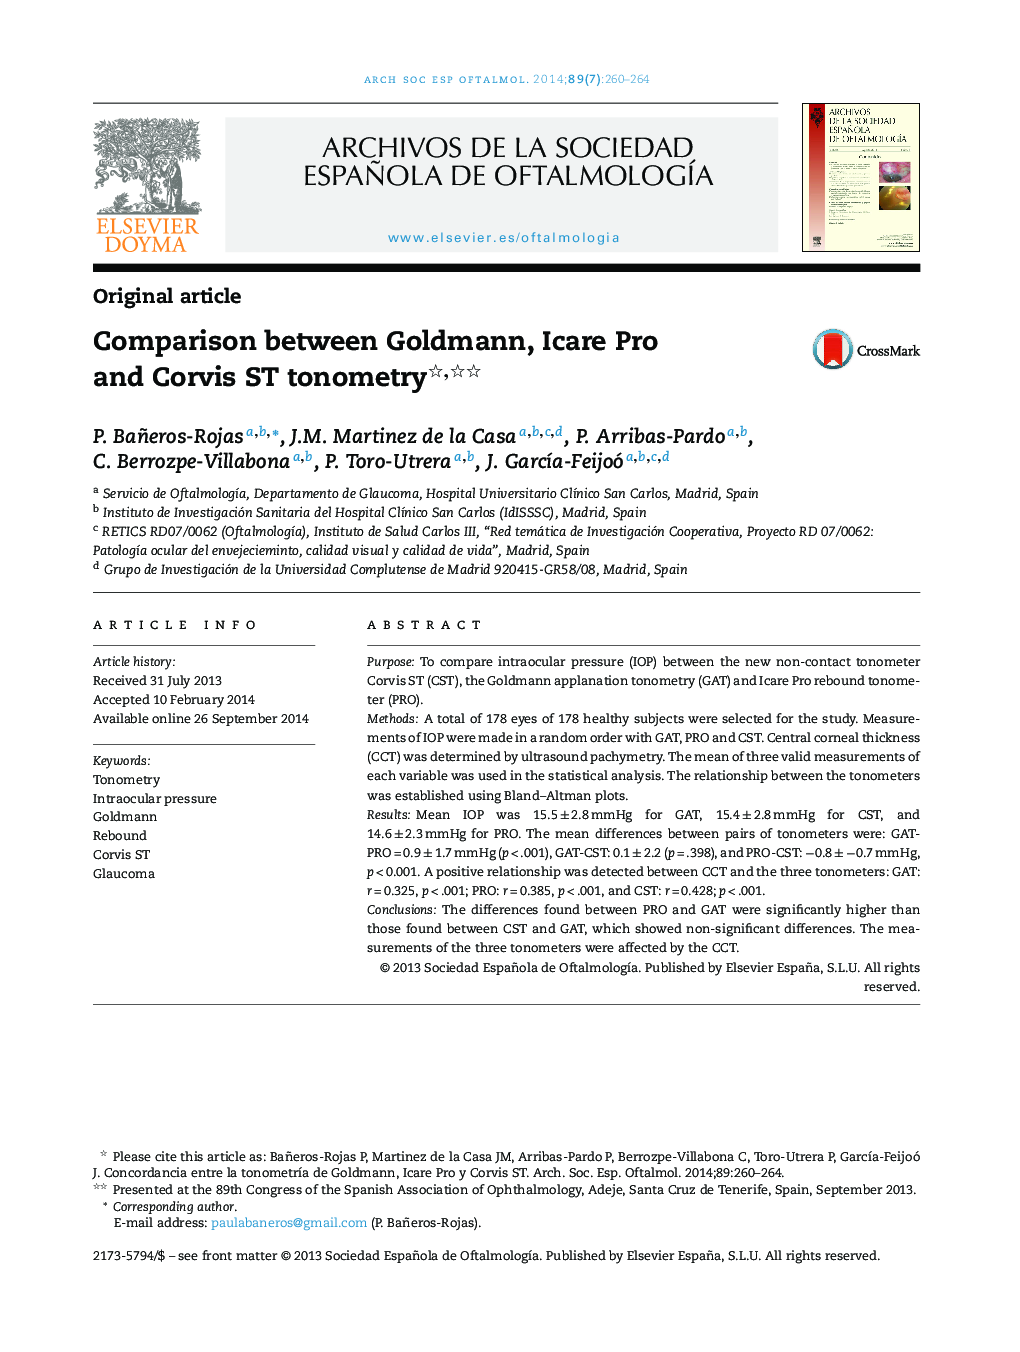 Comparison between Goldmann, Icare Pro and Corvis ST tonometry 